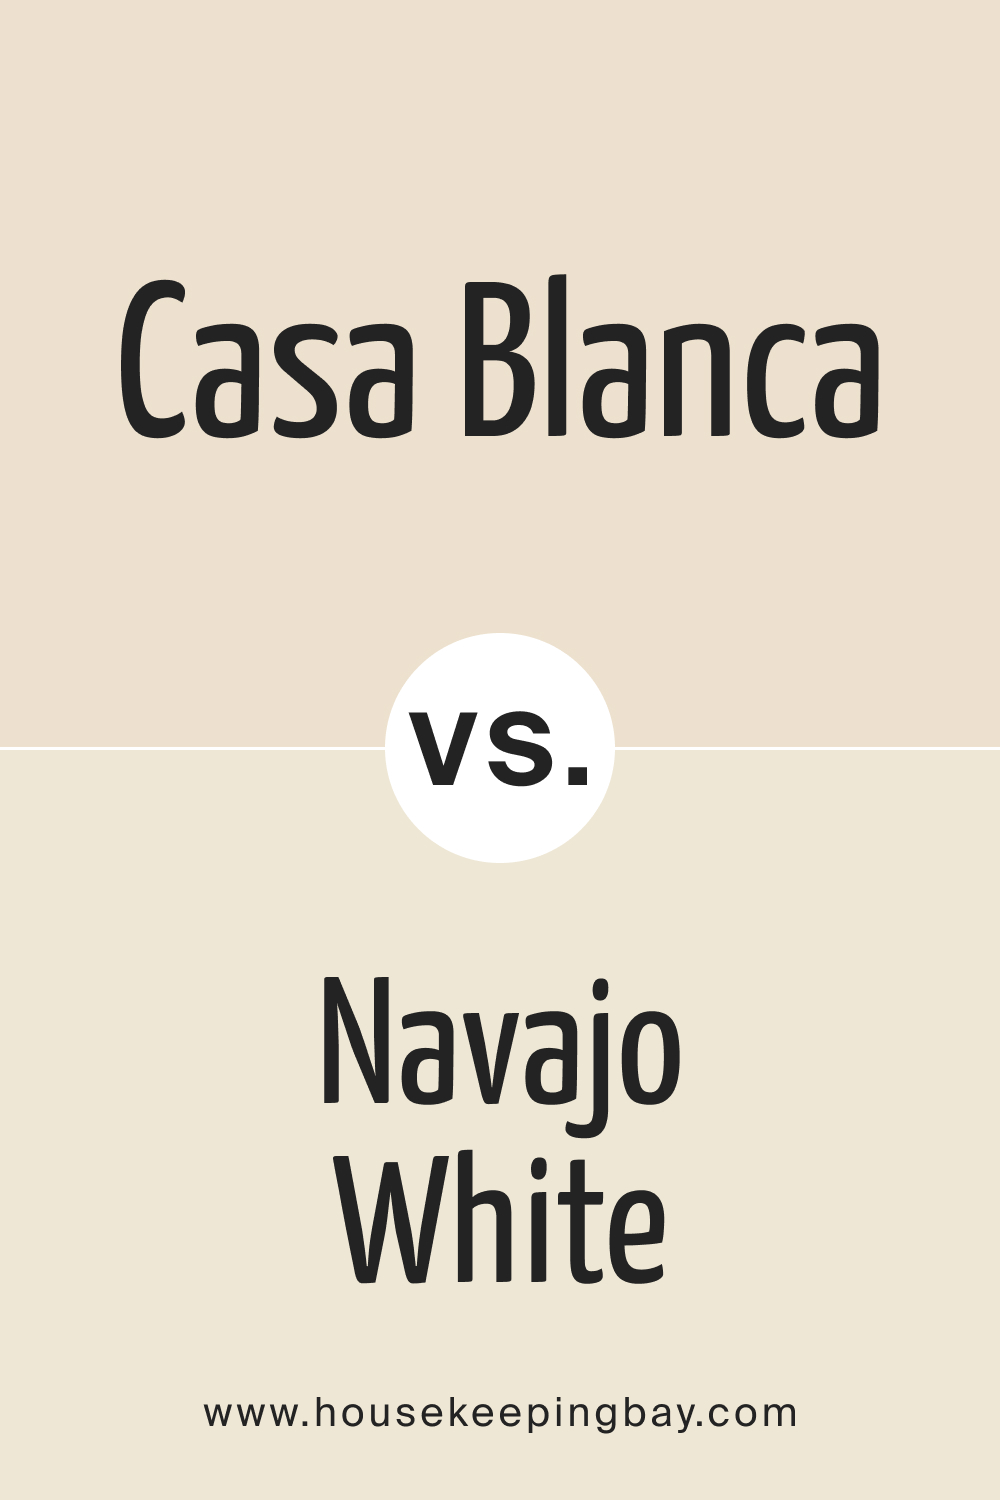 Casa Blanca 7571 Paint Color by Sherwin Williams VS Navajo White